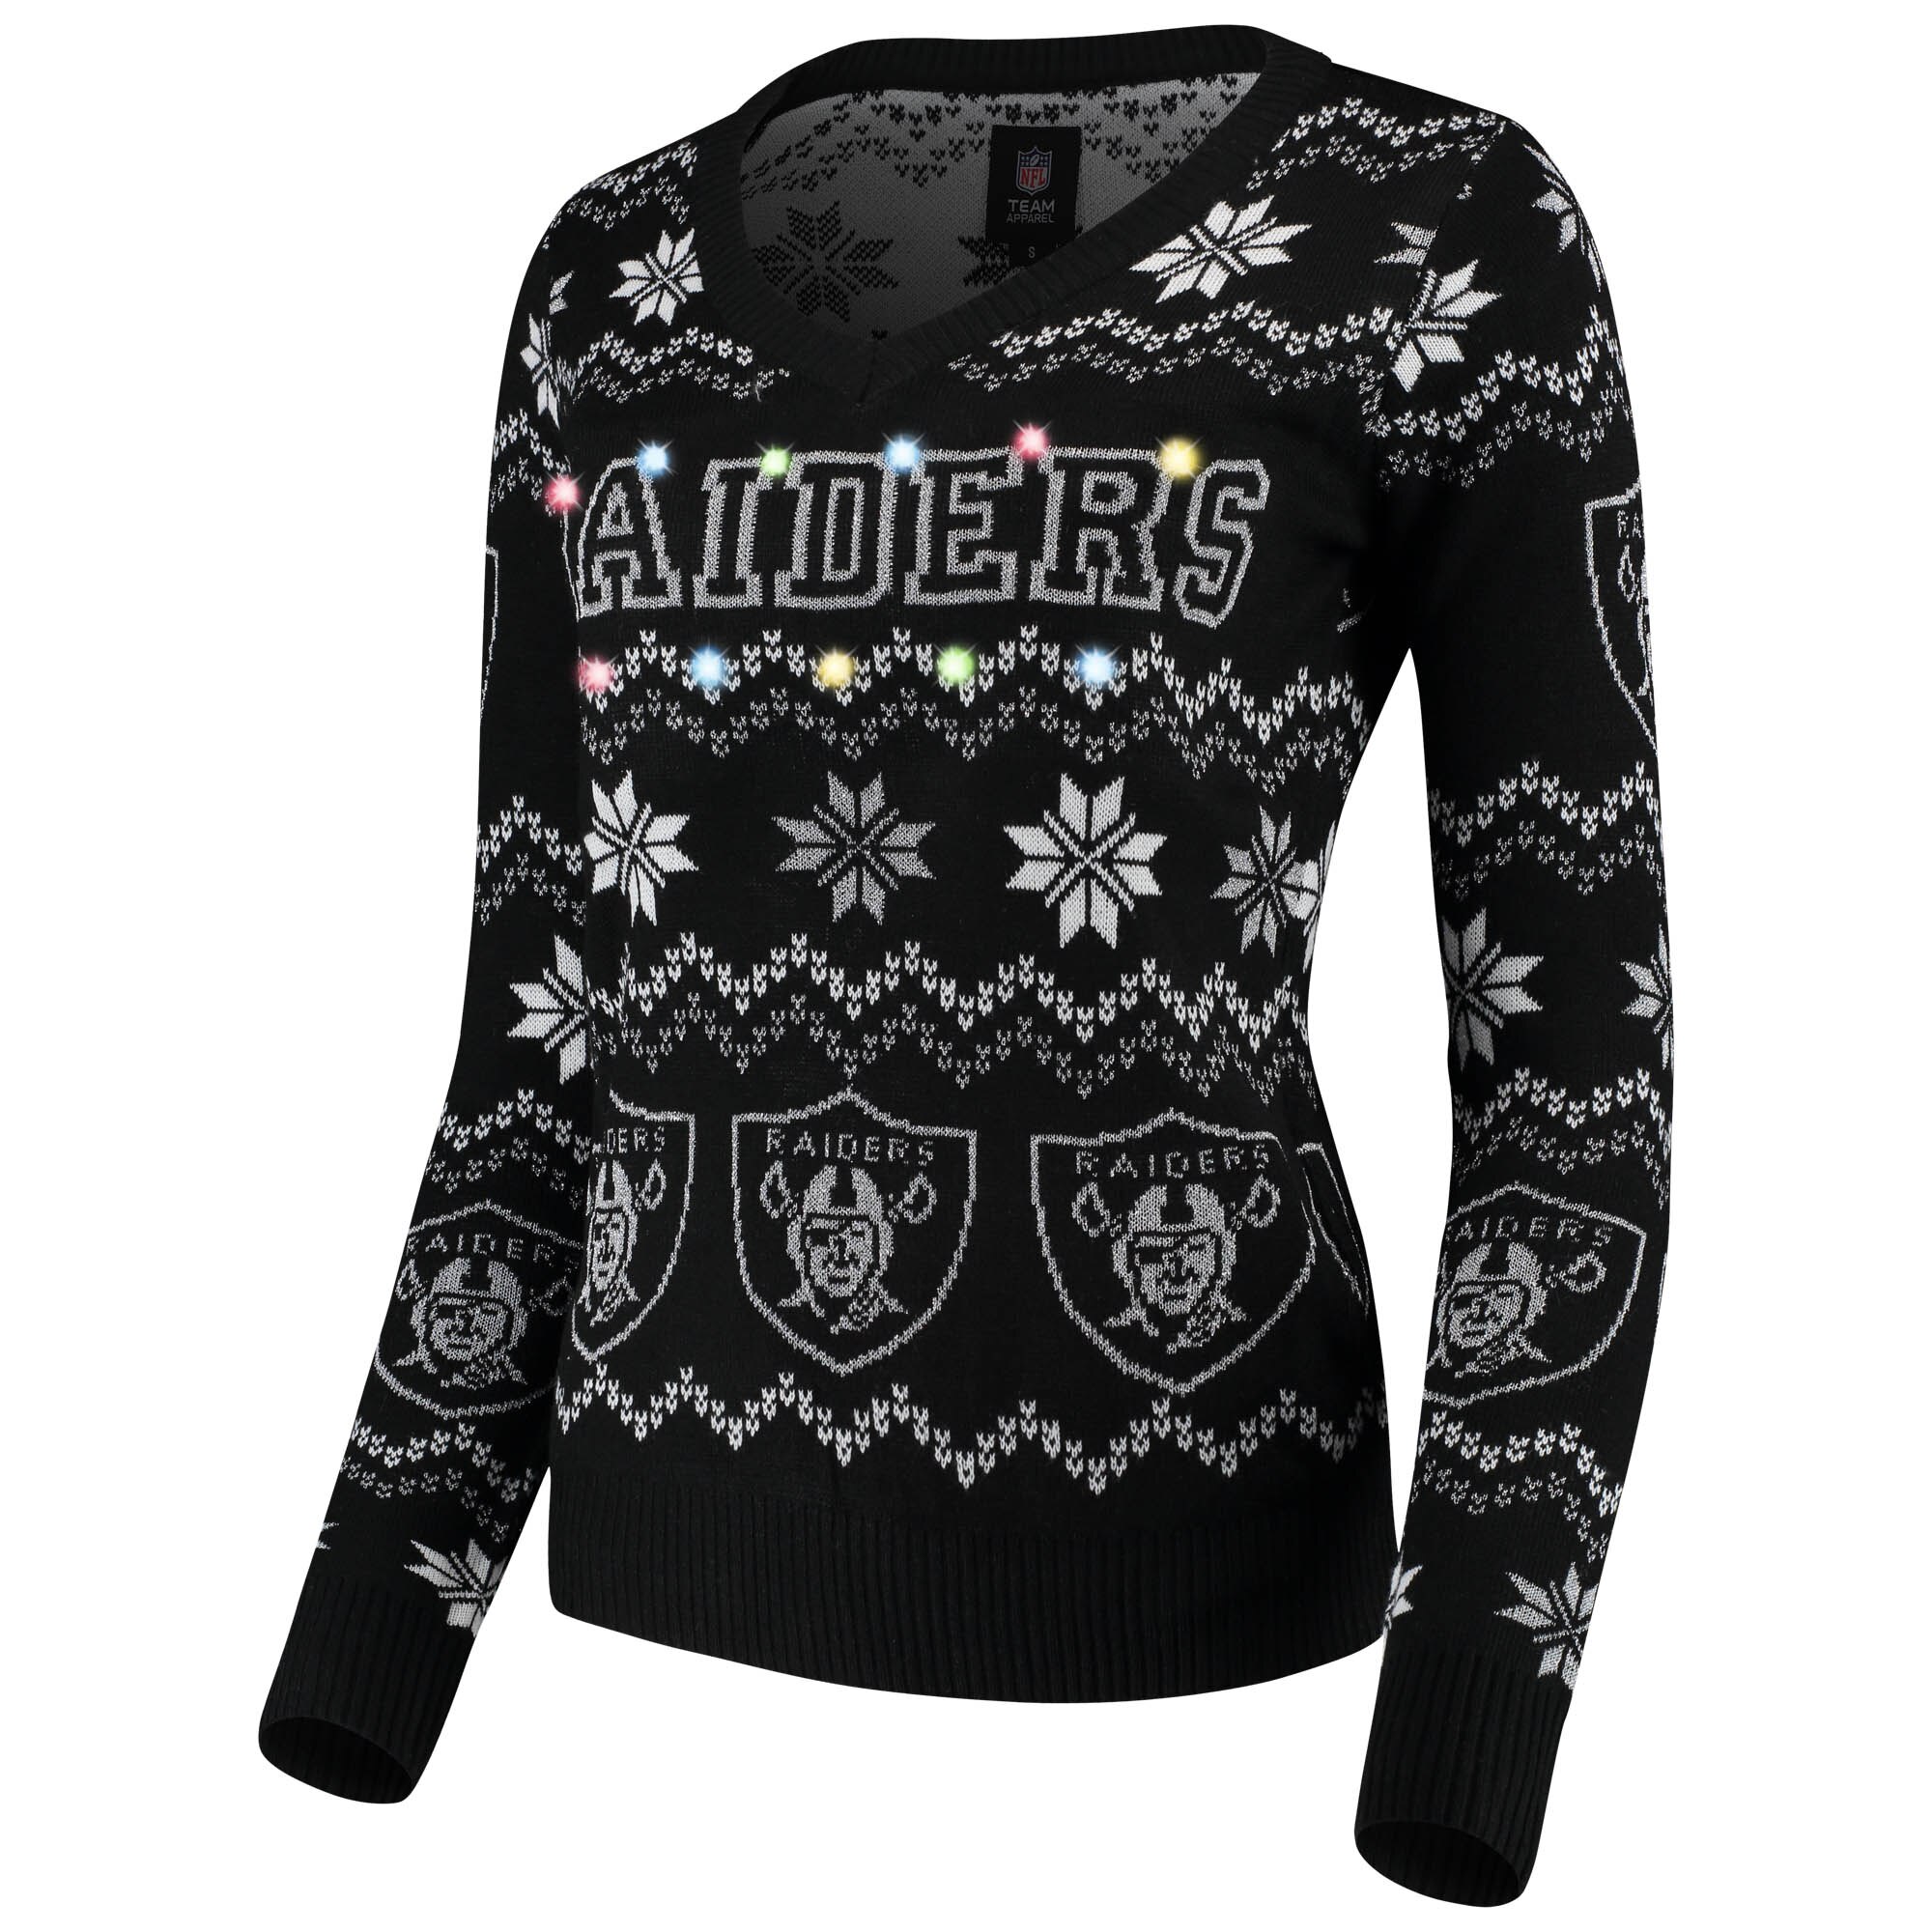 raiders sweater with christmas lights